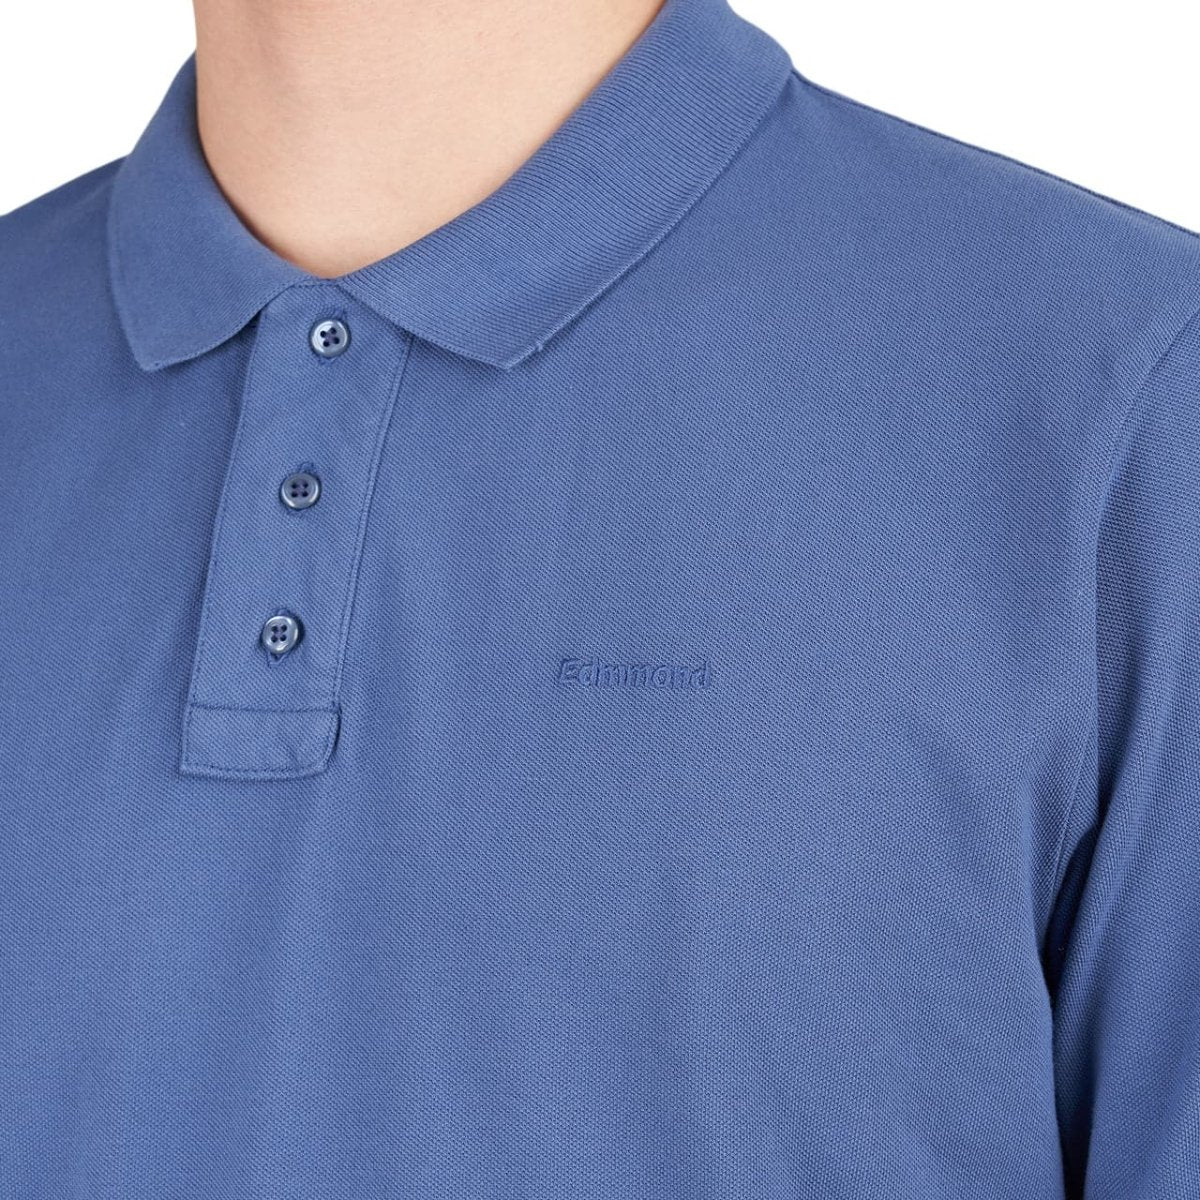 Edmmond Studios Ferry Polo Shirt (Blau)  - Allike Store